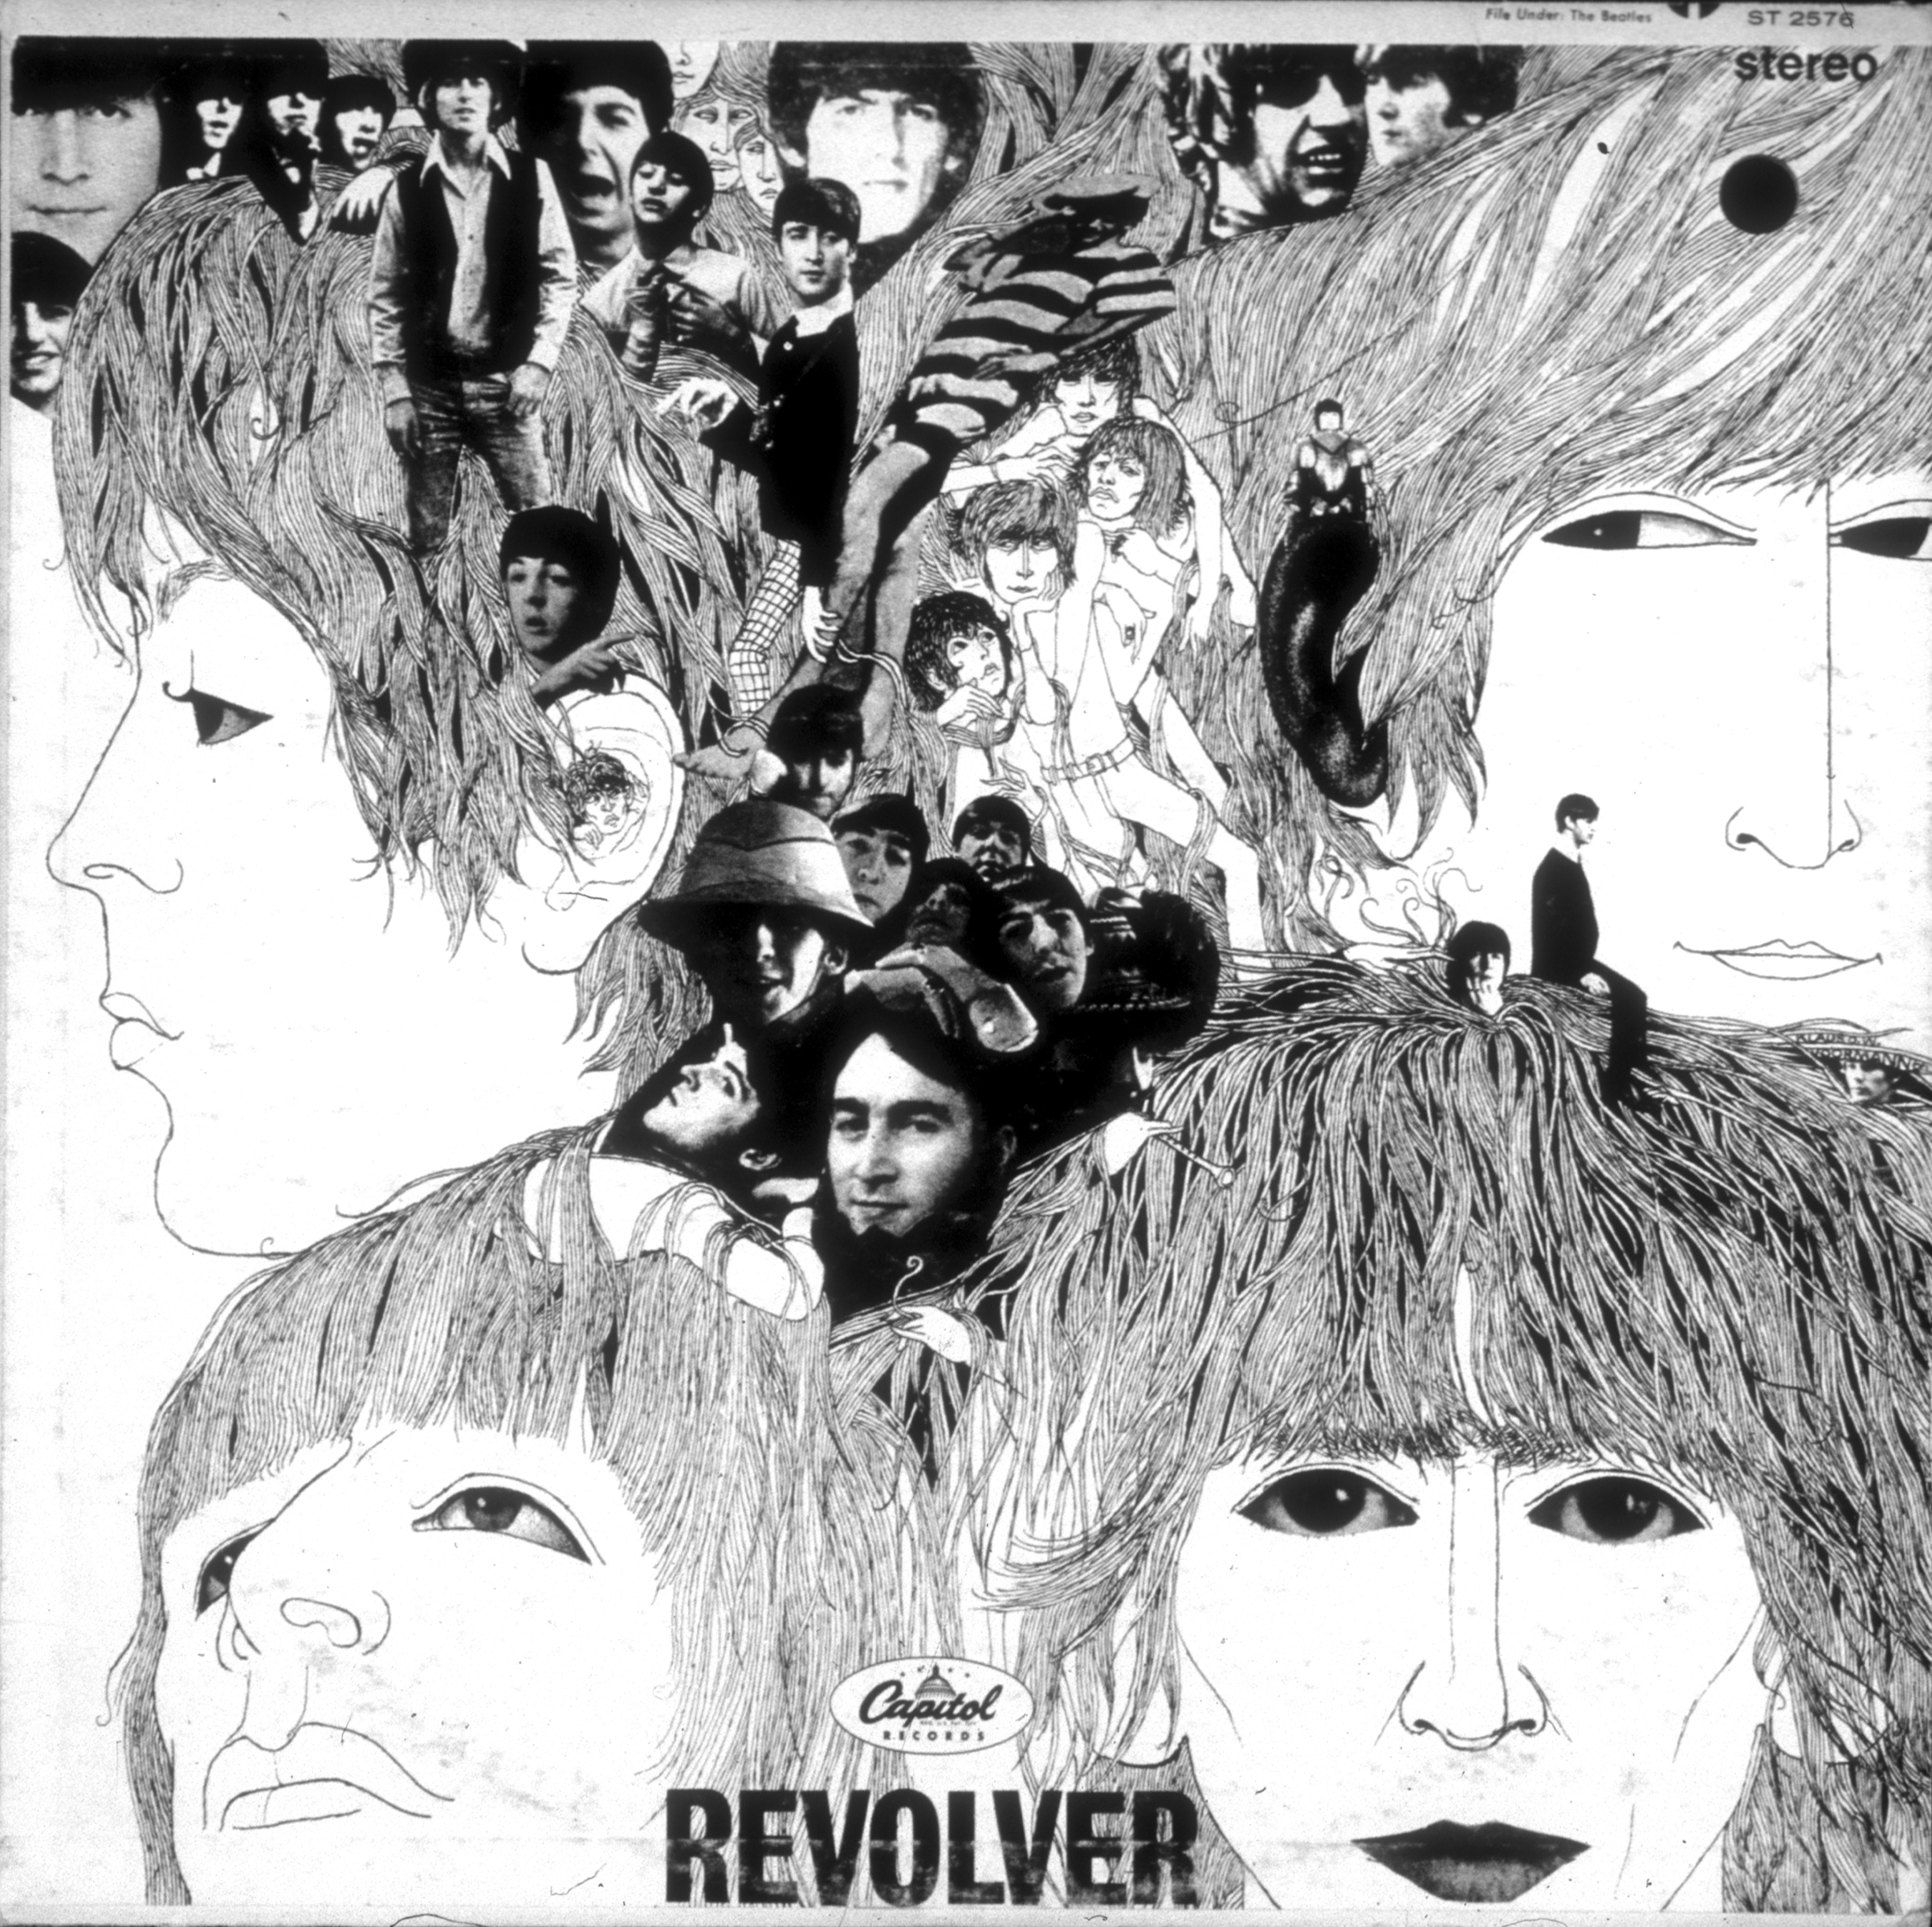 Paul McCartney, Ringo Starr, John Lennon, and George Harrison on the cover of The Beatles' 'Revolver'